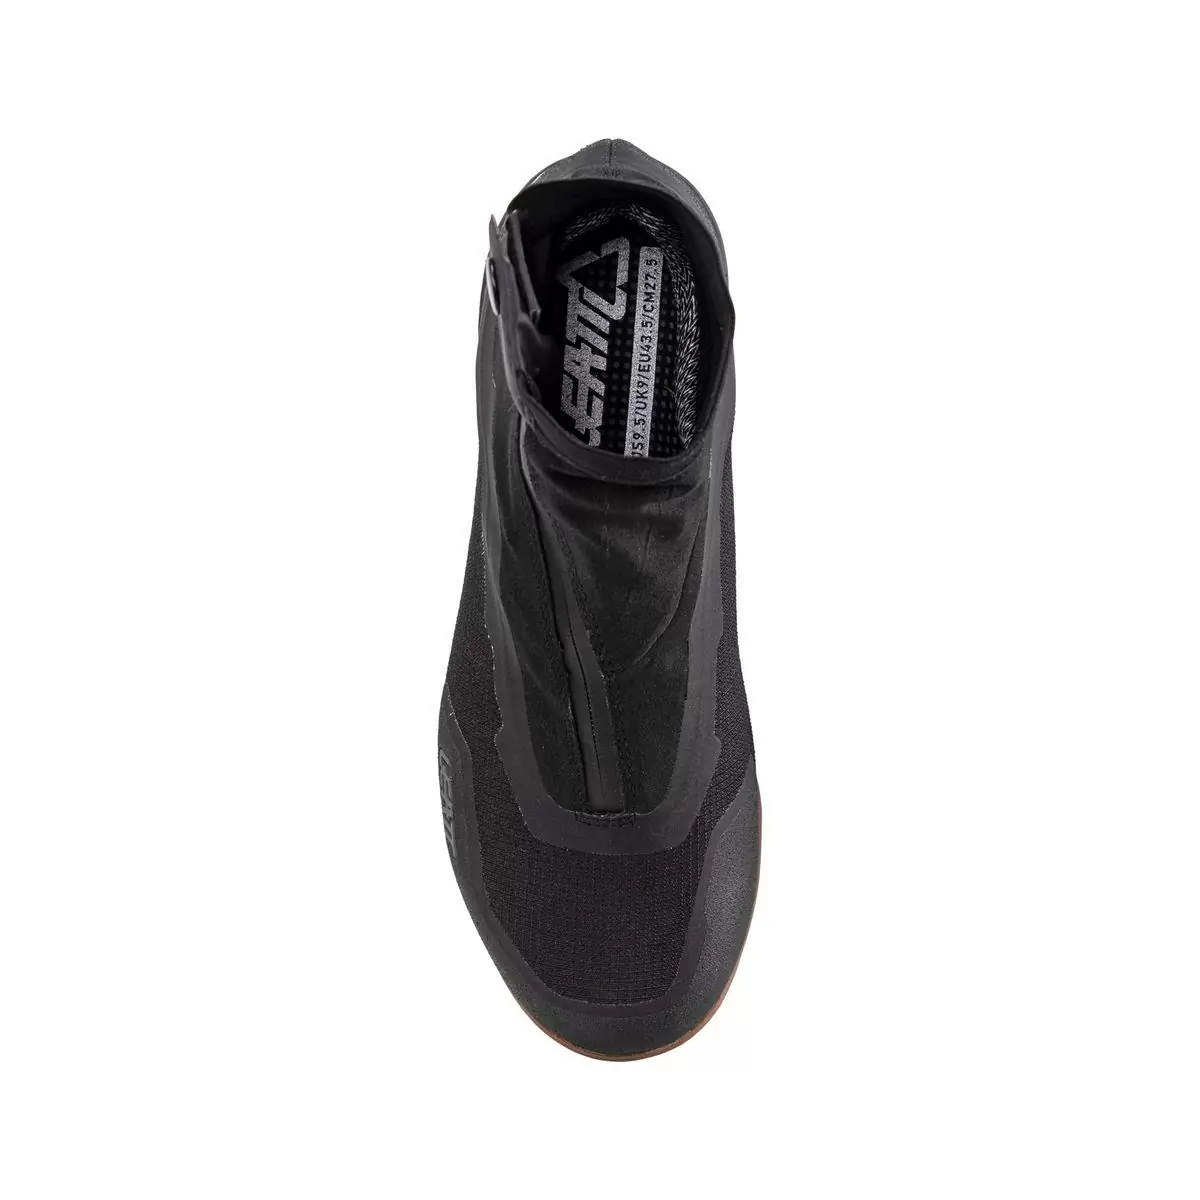 Waterproof MTB Shoes 7.0 HydraDri Clip Black Size 47 #2